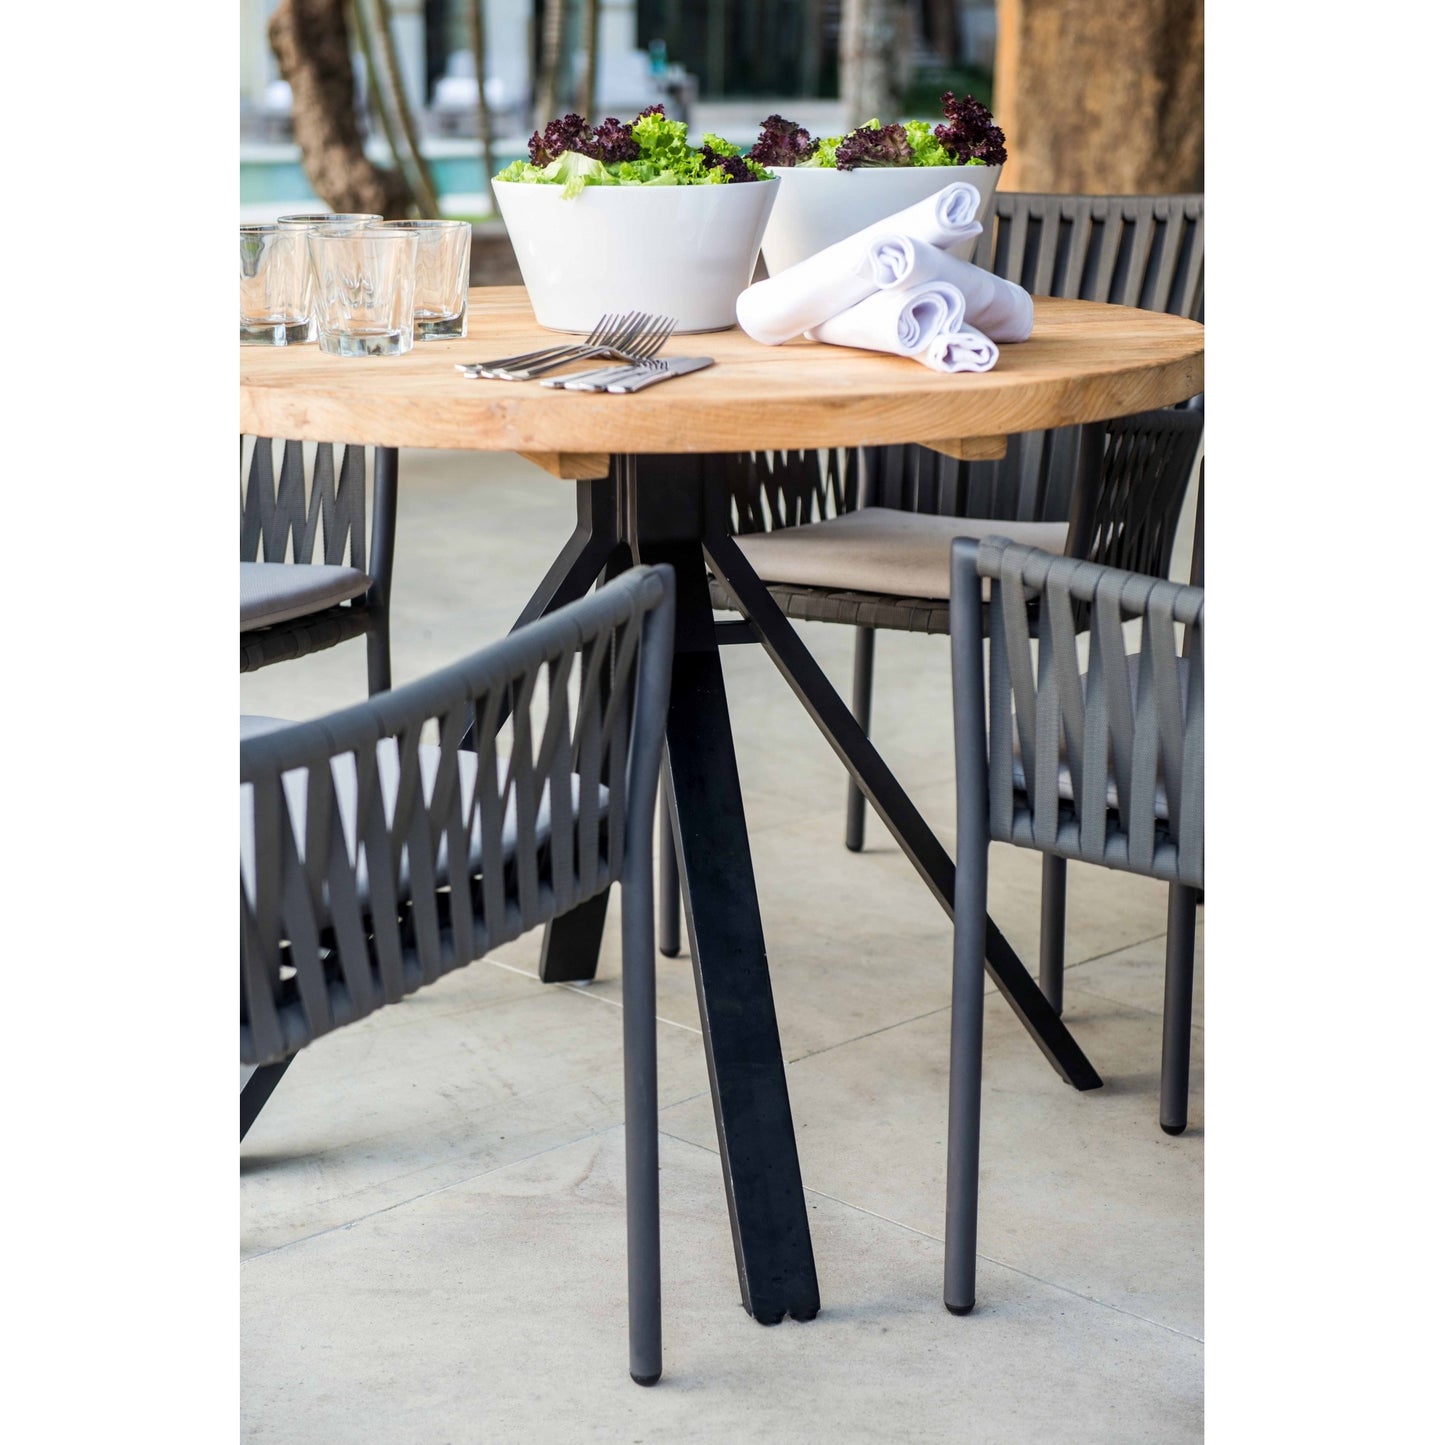 Bowline Dining Chair - PadioLiving - Bowline Dining Chair - Outdoor Dining Chair - PadioLiving